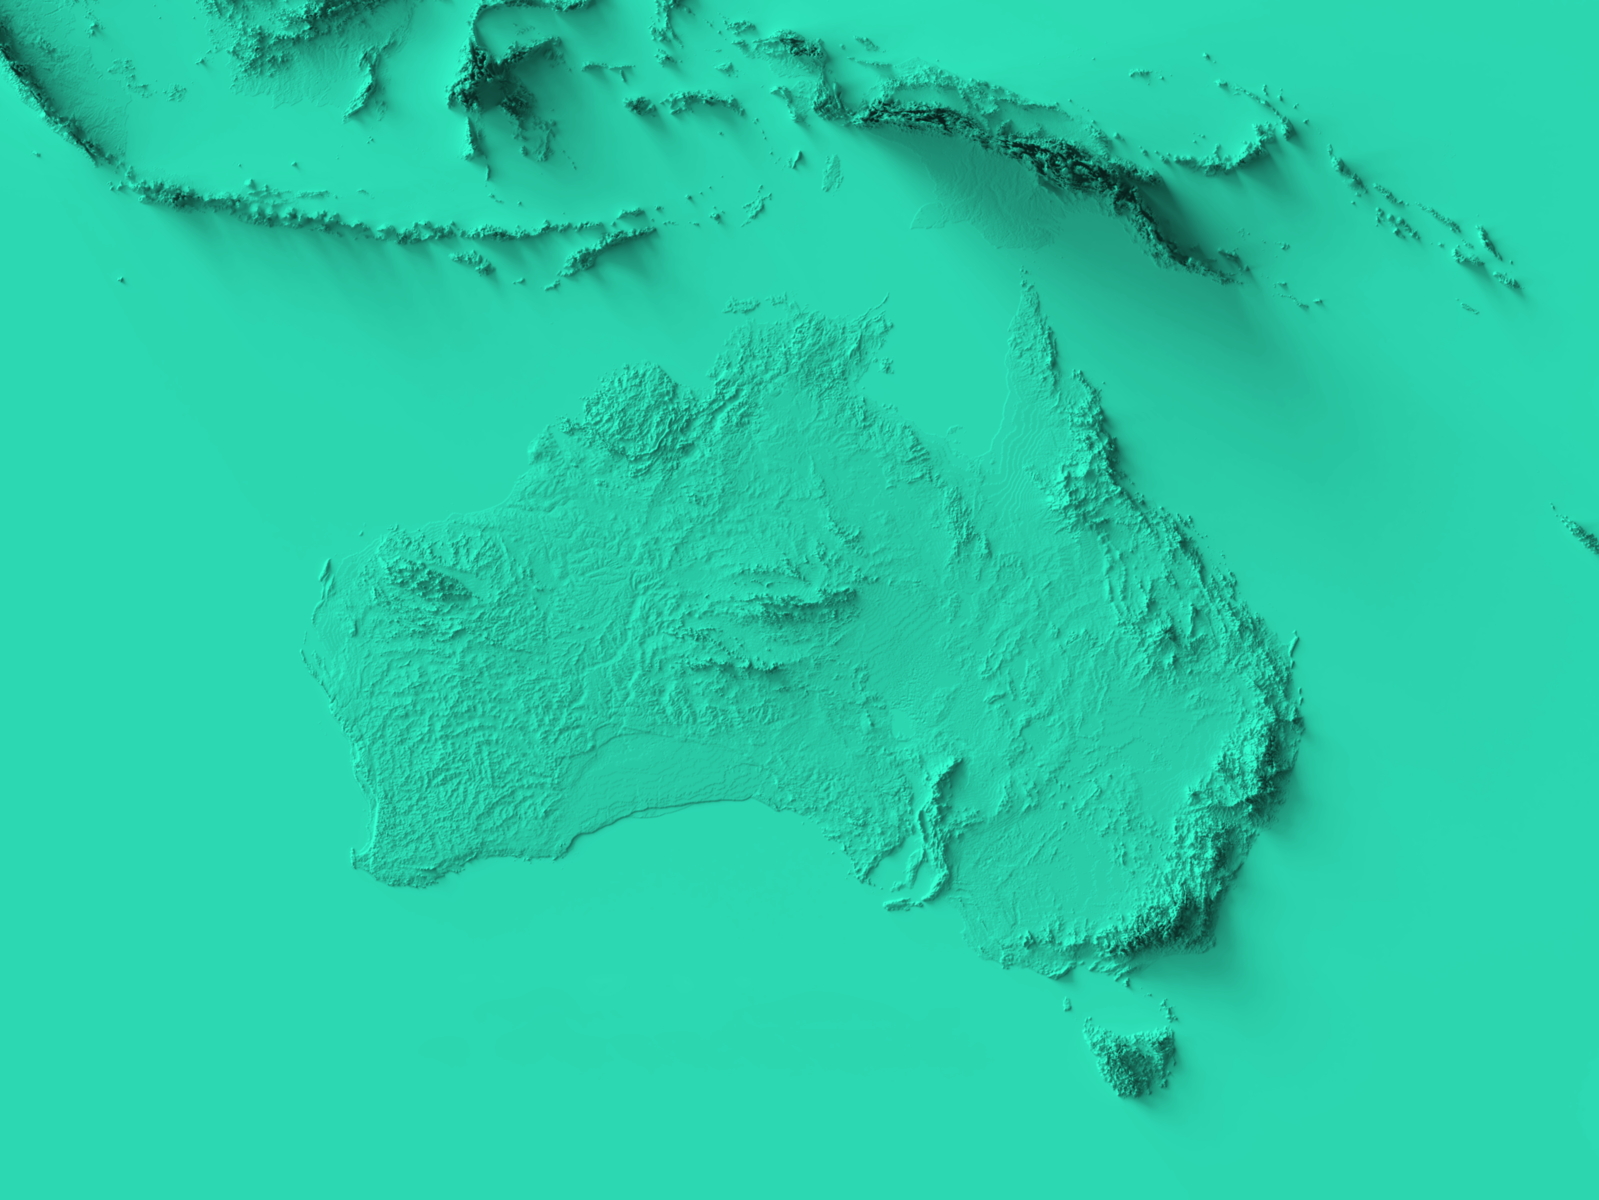 Australia Topography by Geordie Ross-Conley on Dribbble